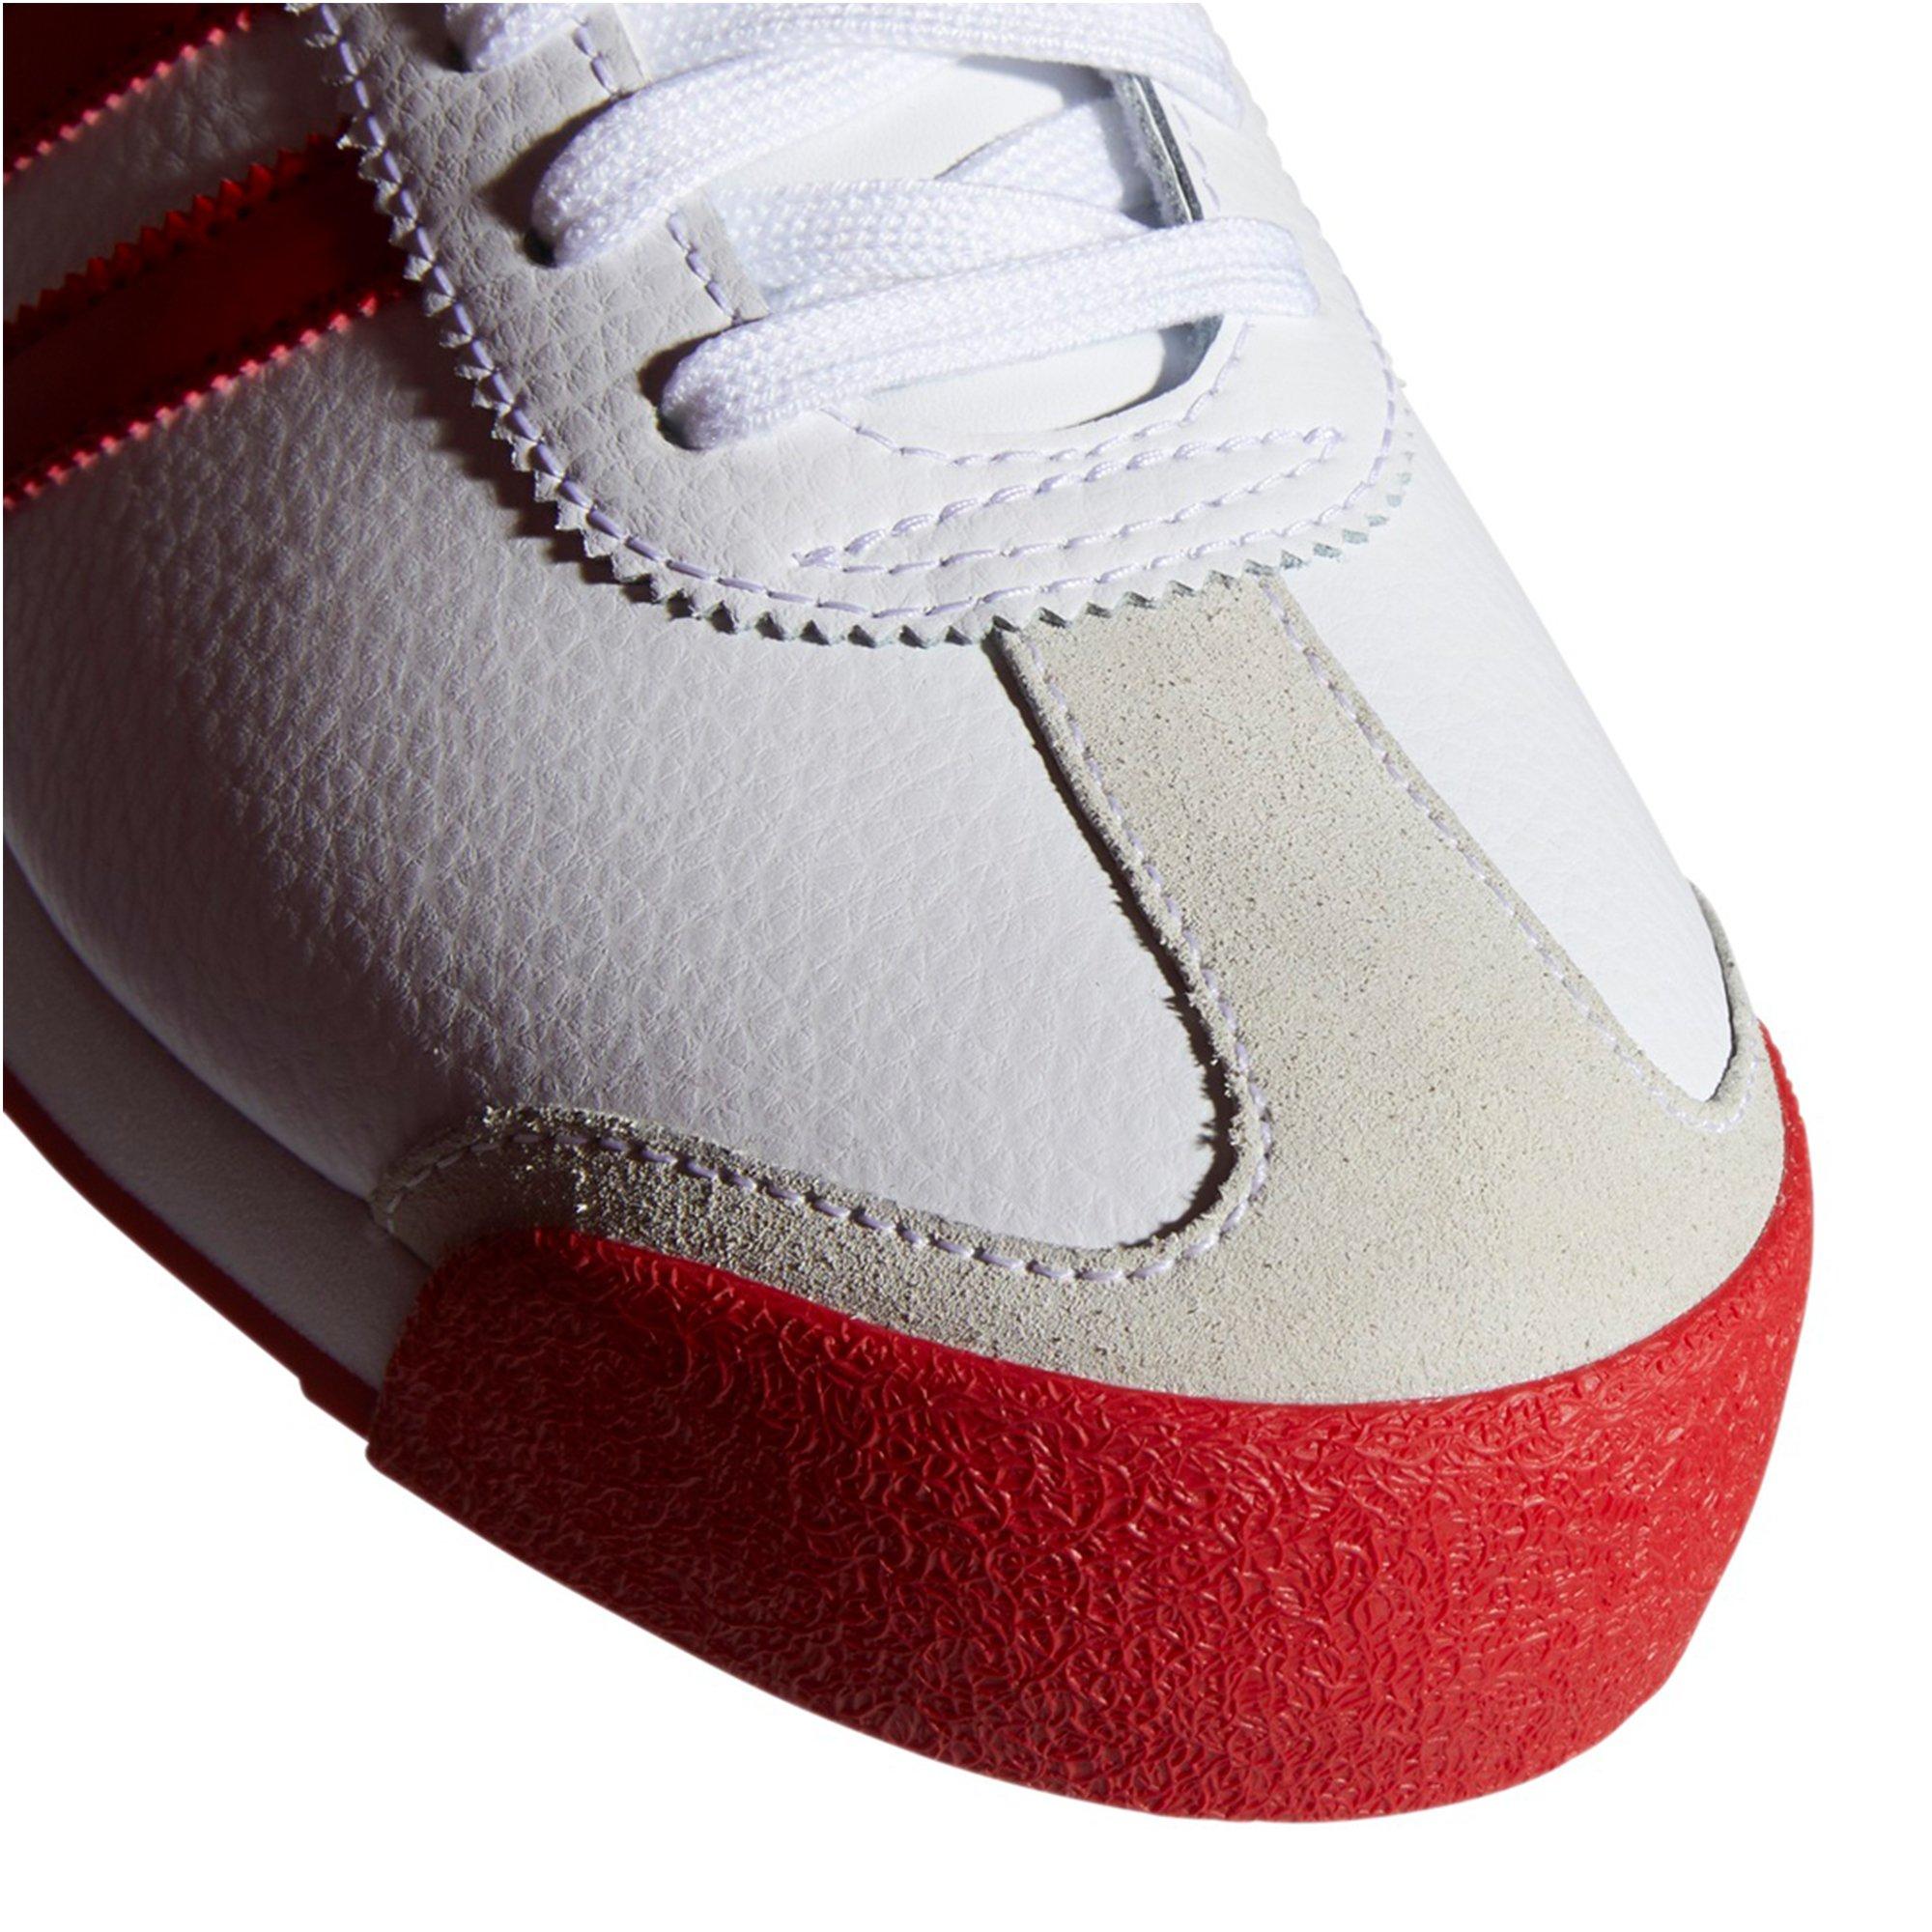 adidas samoa men's red and white